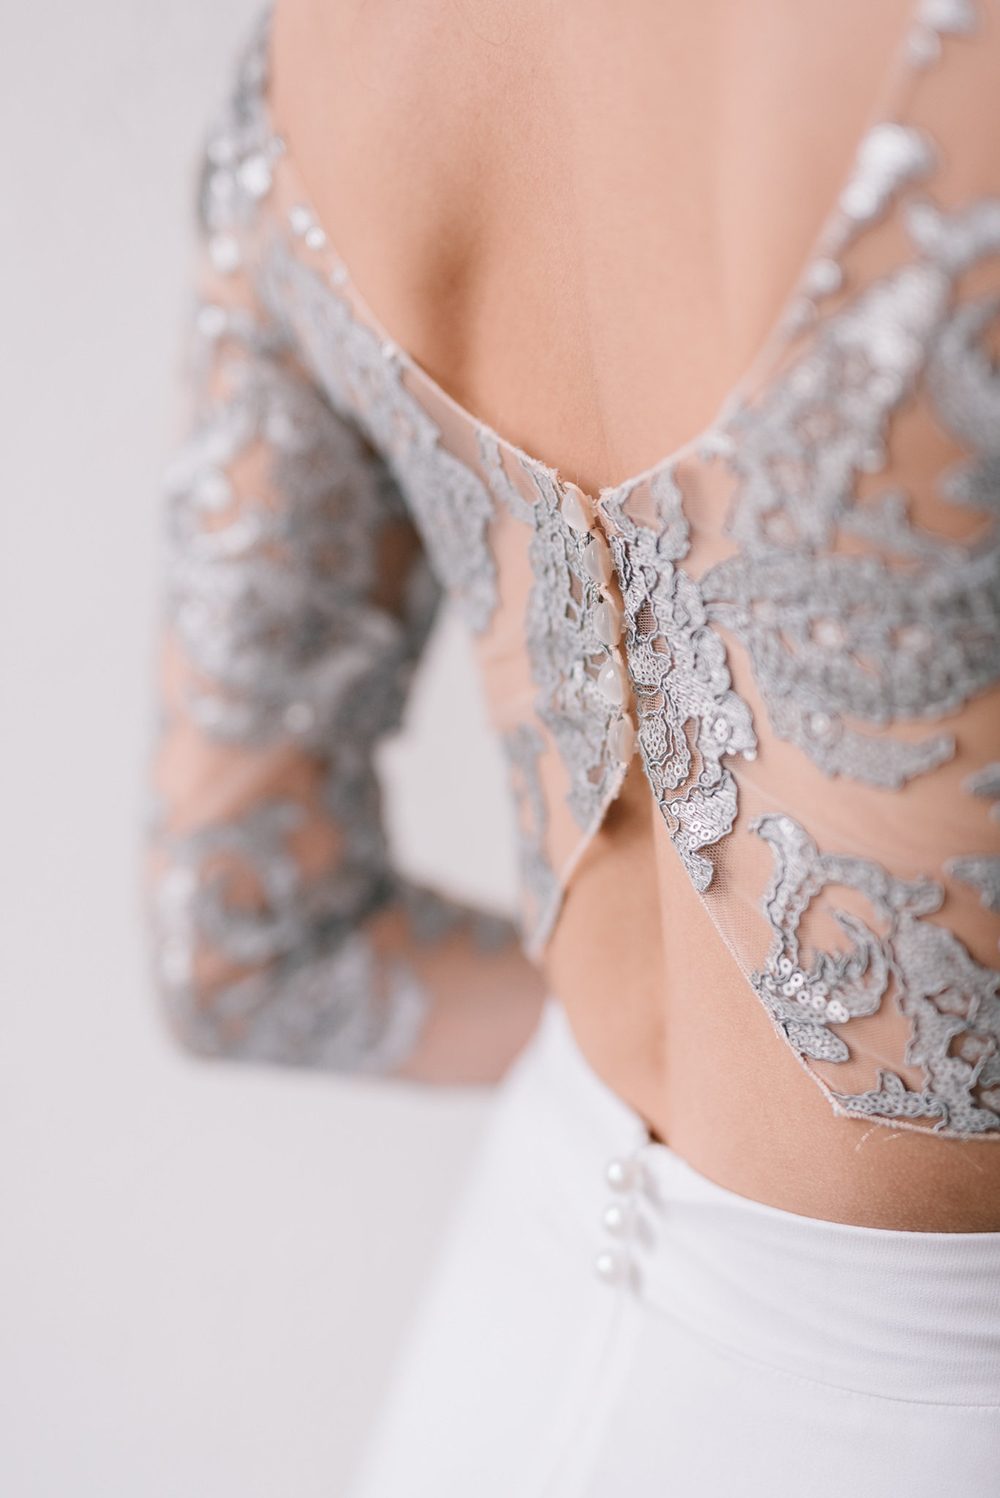 Aurélia Hoang collection 2018 - Robes de mariée - Blog Mariage Madame C